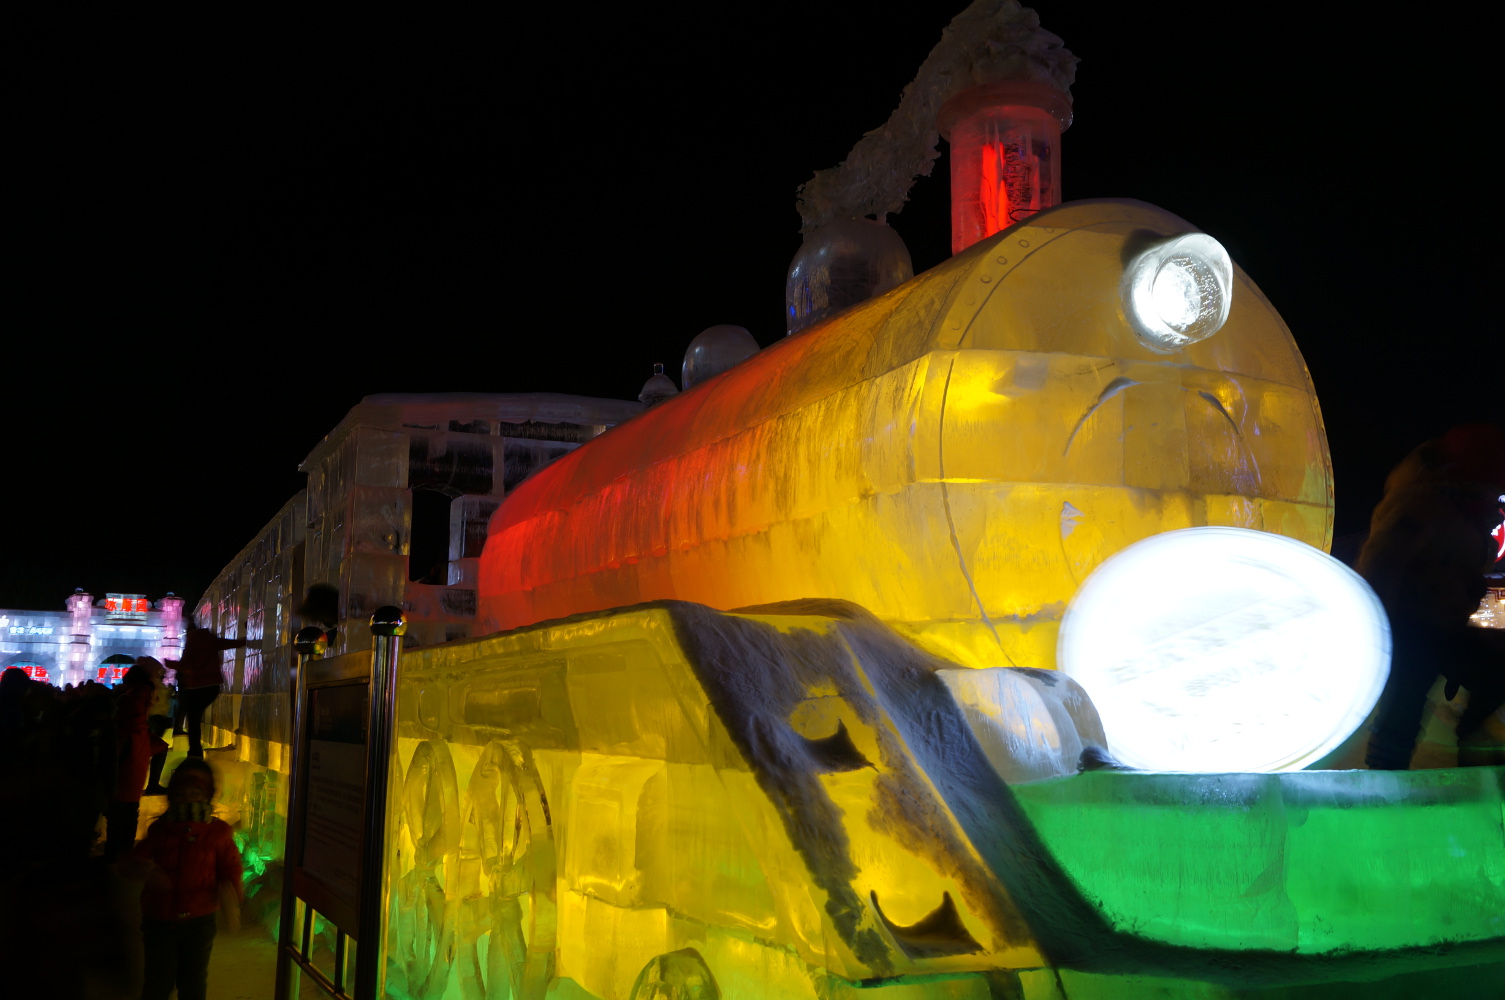 Icy train sculpture nods to Harbin's long railway history. Image by Anita Isalska / londoninfopage